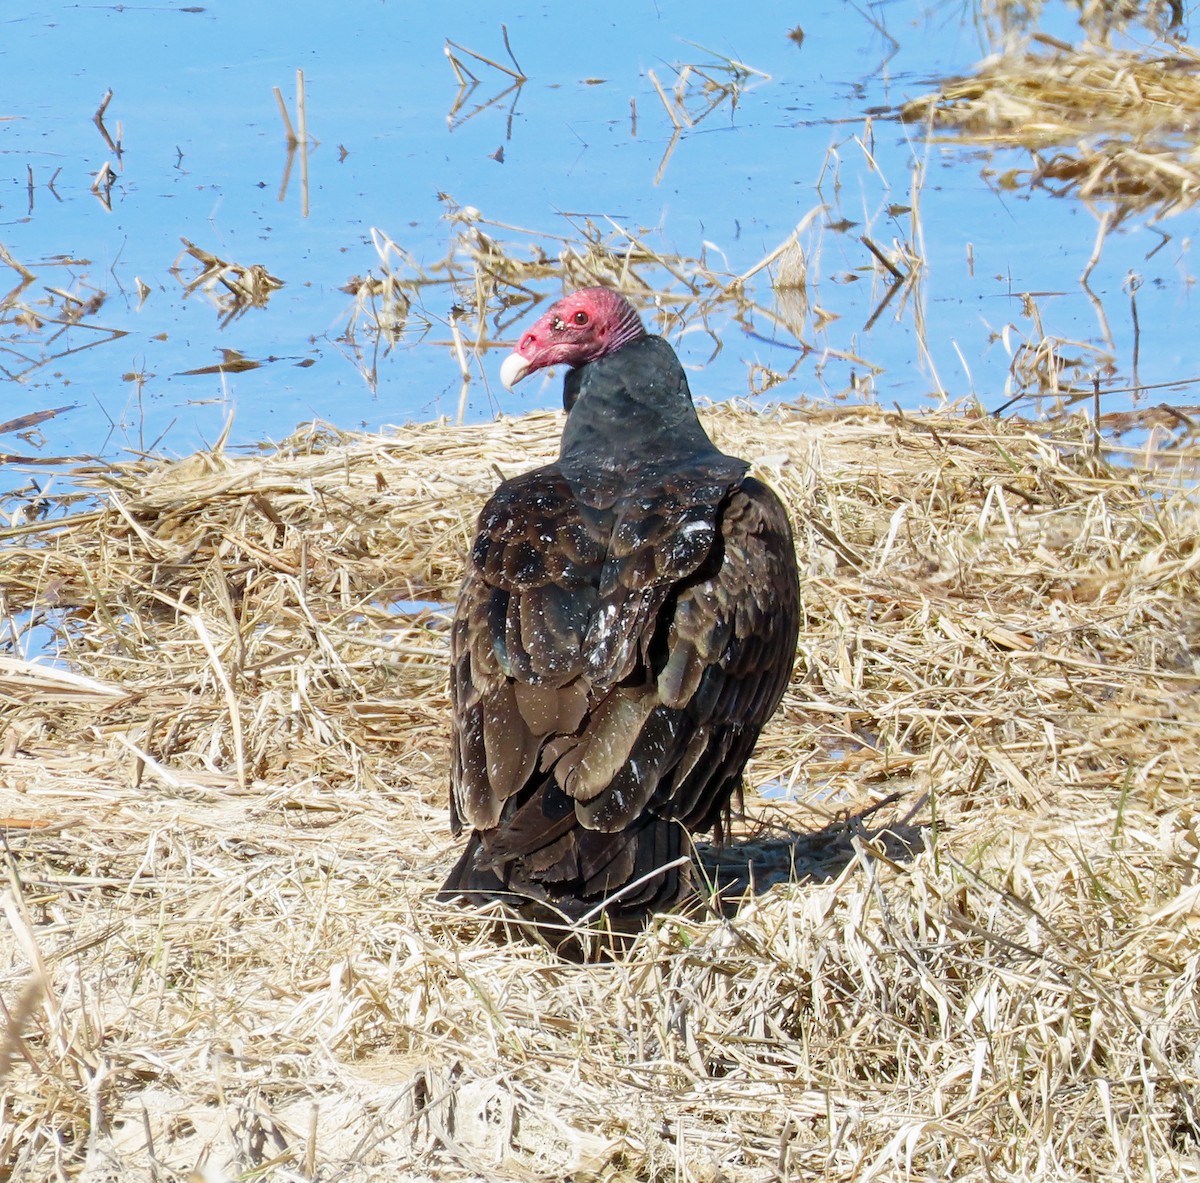 Turkey Vulture - JoAnn Potter Riggle 🦤